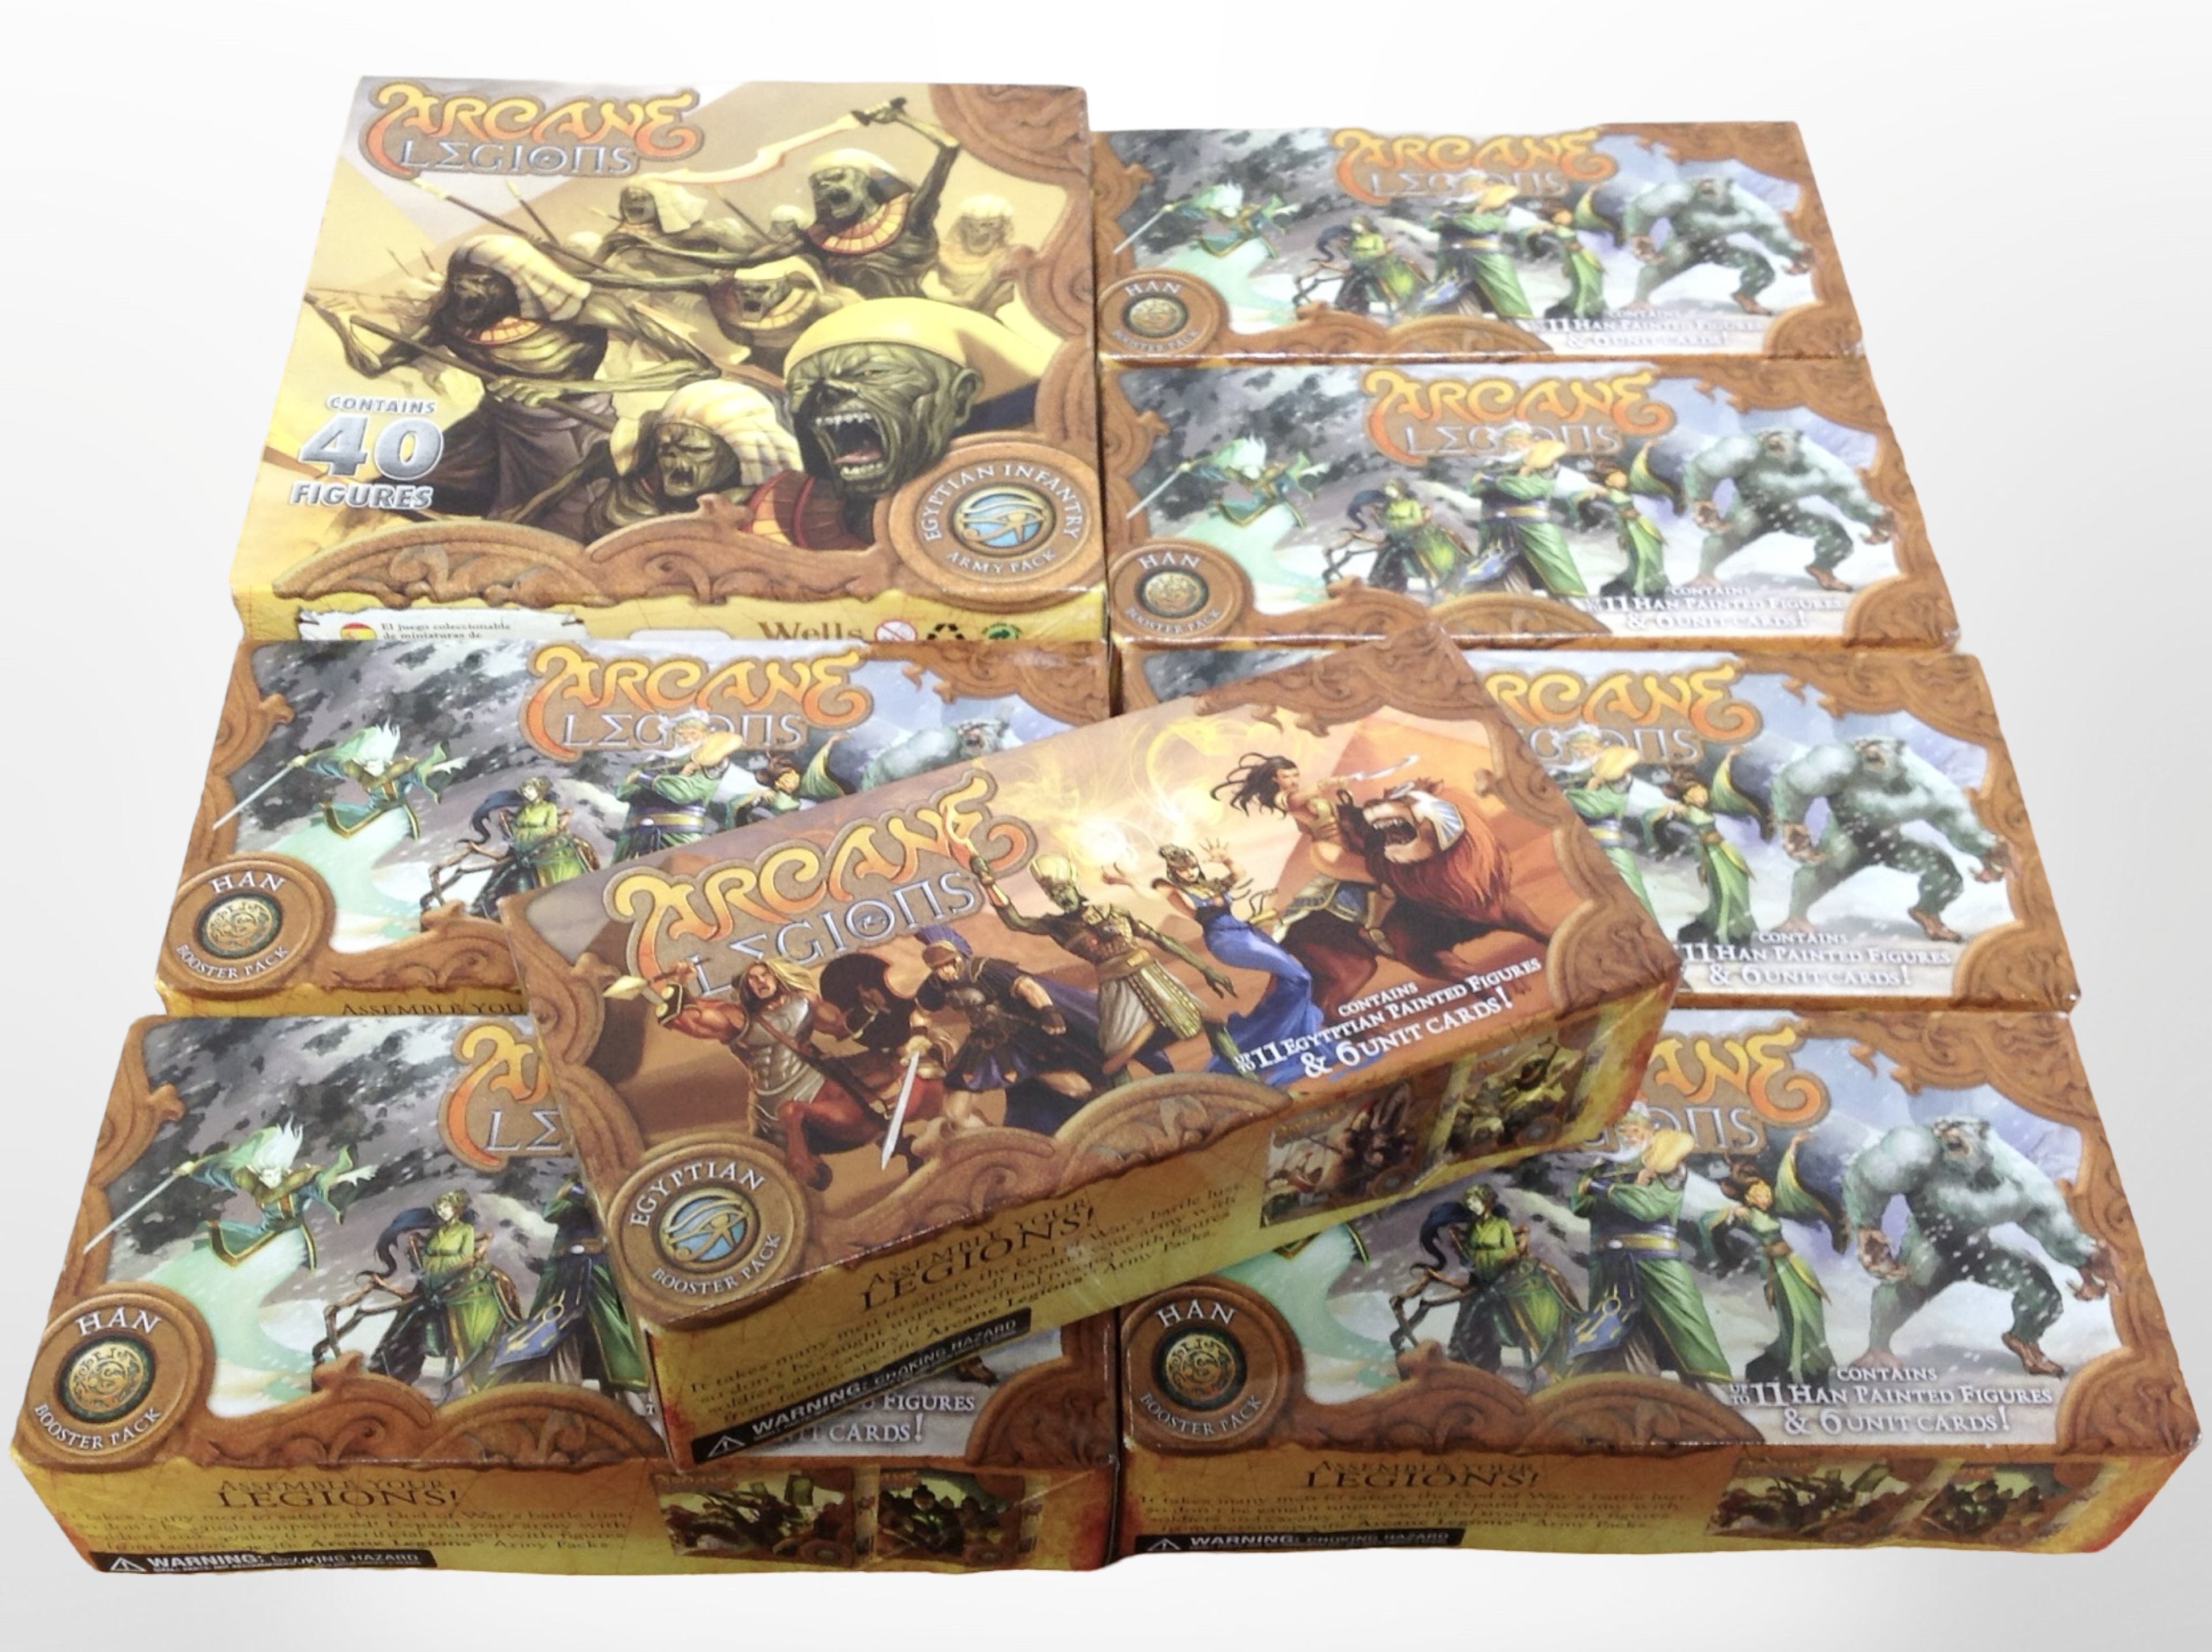 Eight Arcane Legions miniatures game figurine box sets.